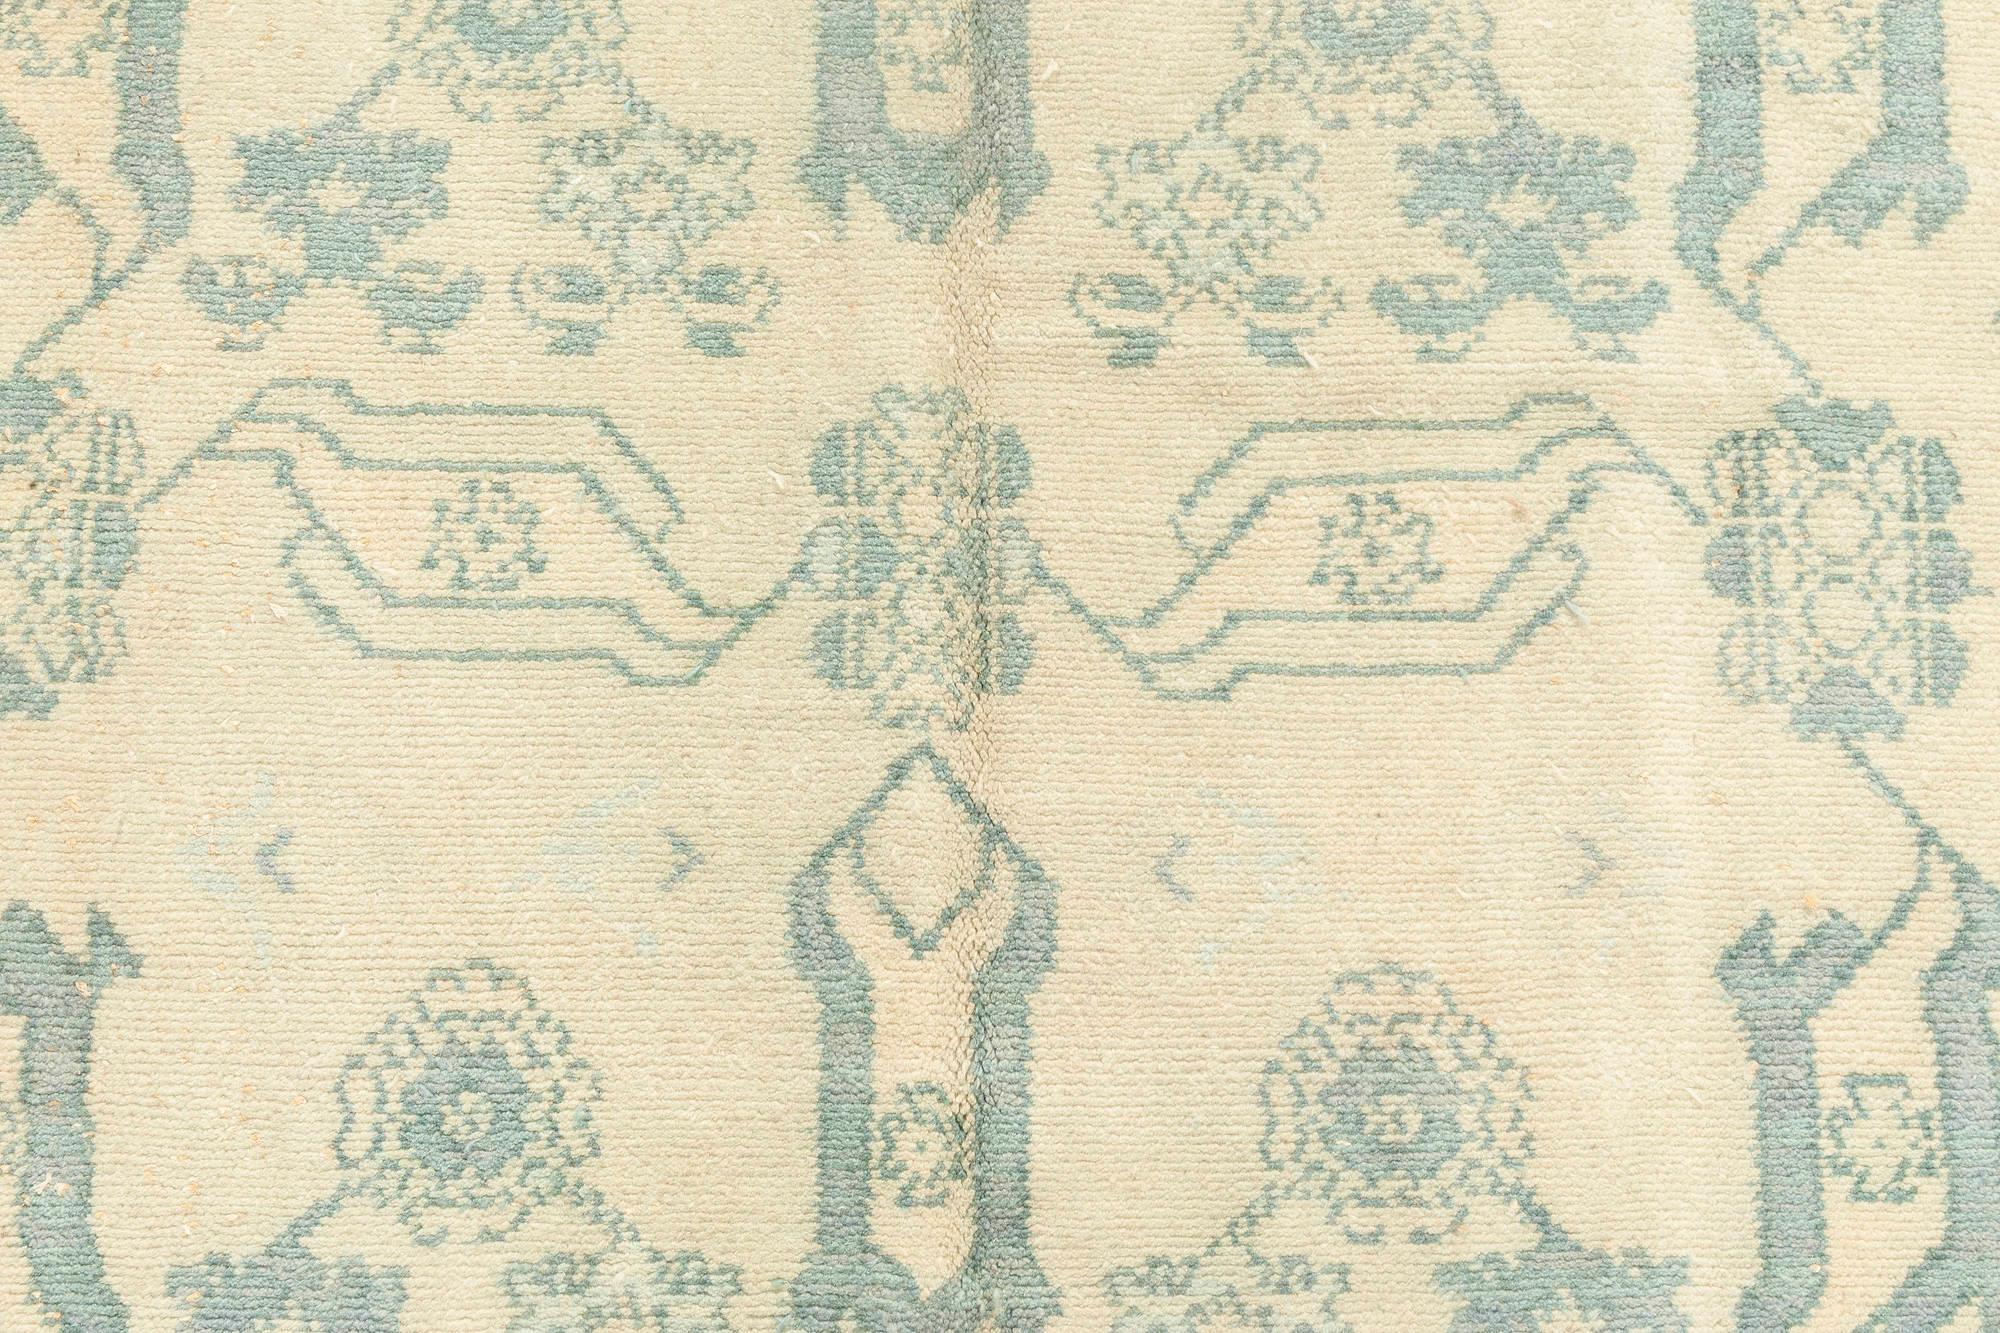 Mid-20th century Spanish blue, ivory handmade wool rug.
Size: 6'0